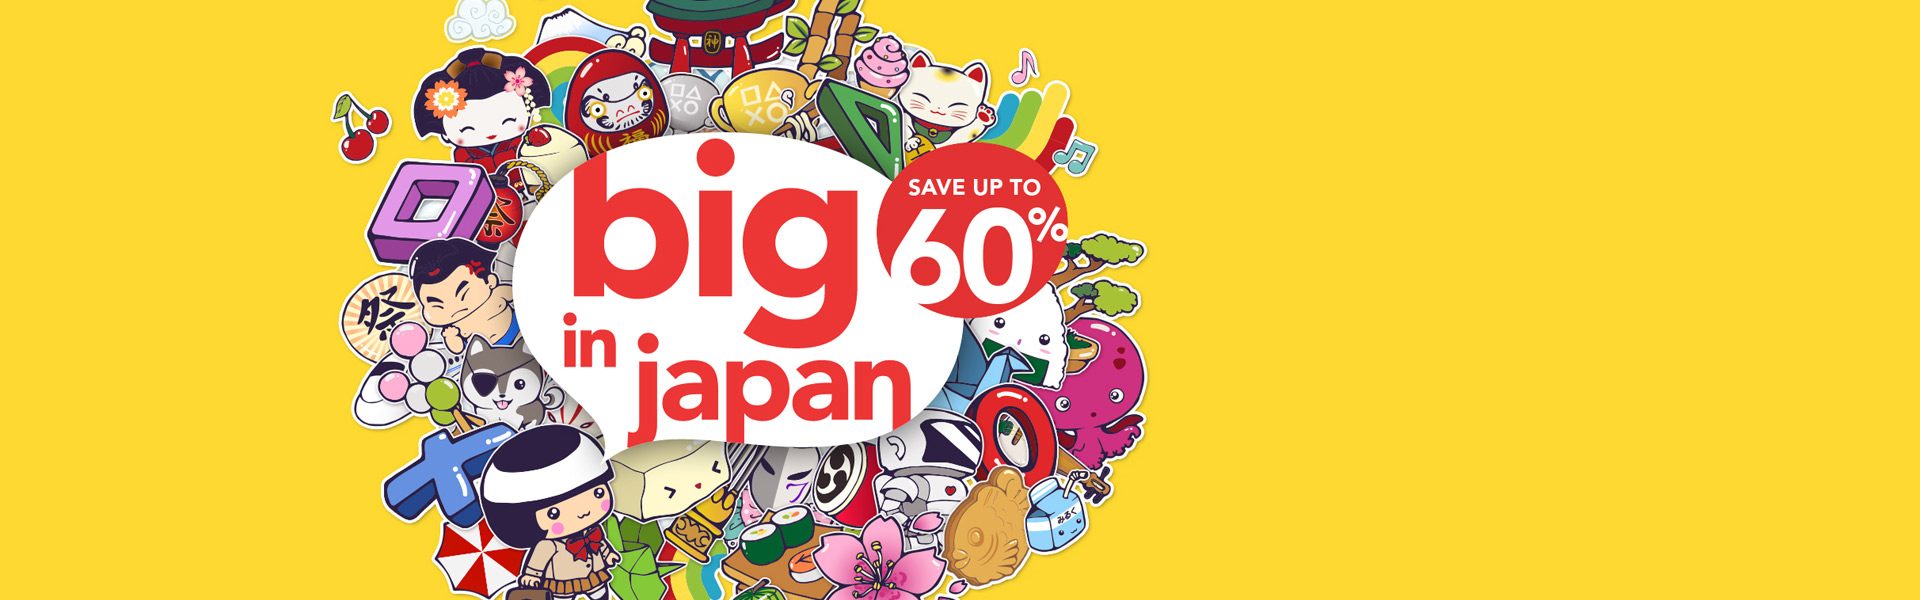 ps4 big in japan sale